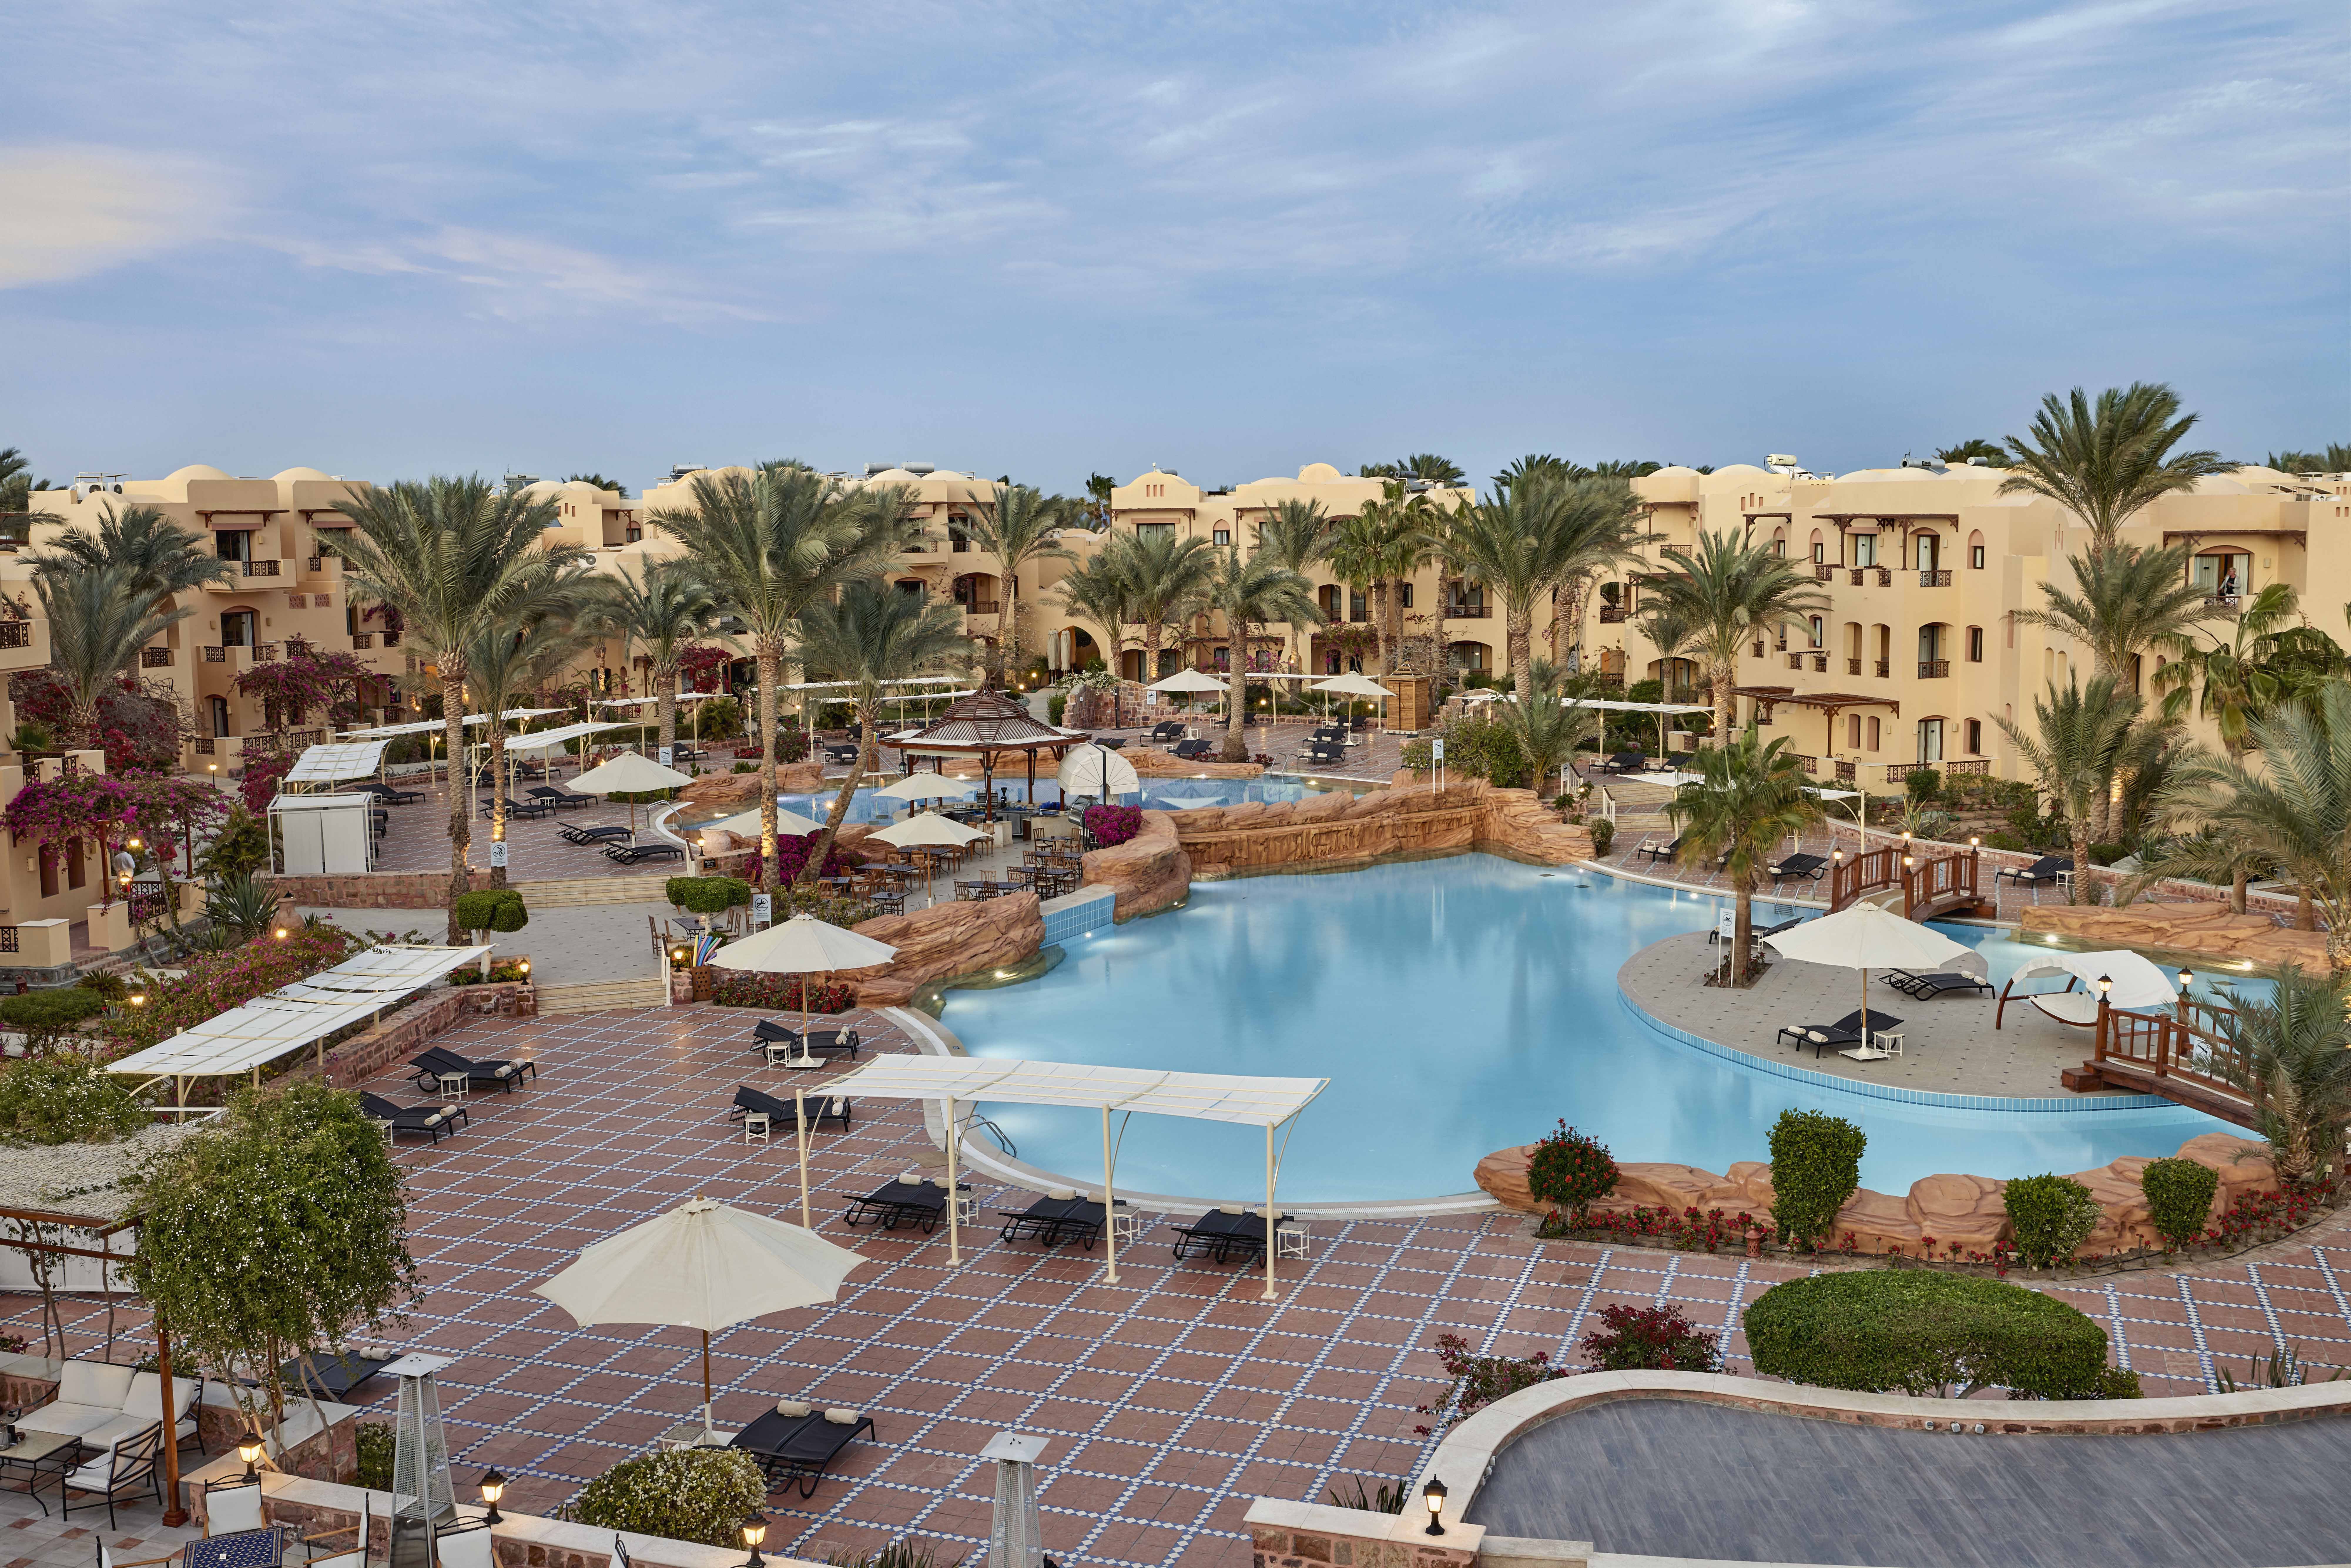 Hotel Steigenberger Coraya Beach in Marsa Alam • HolidayCheck | Marsa